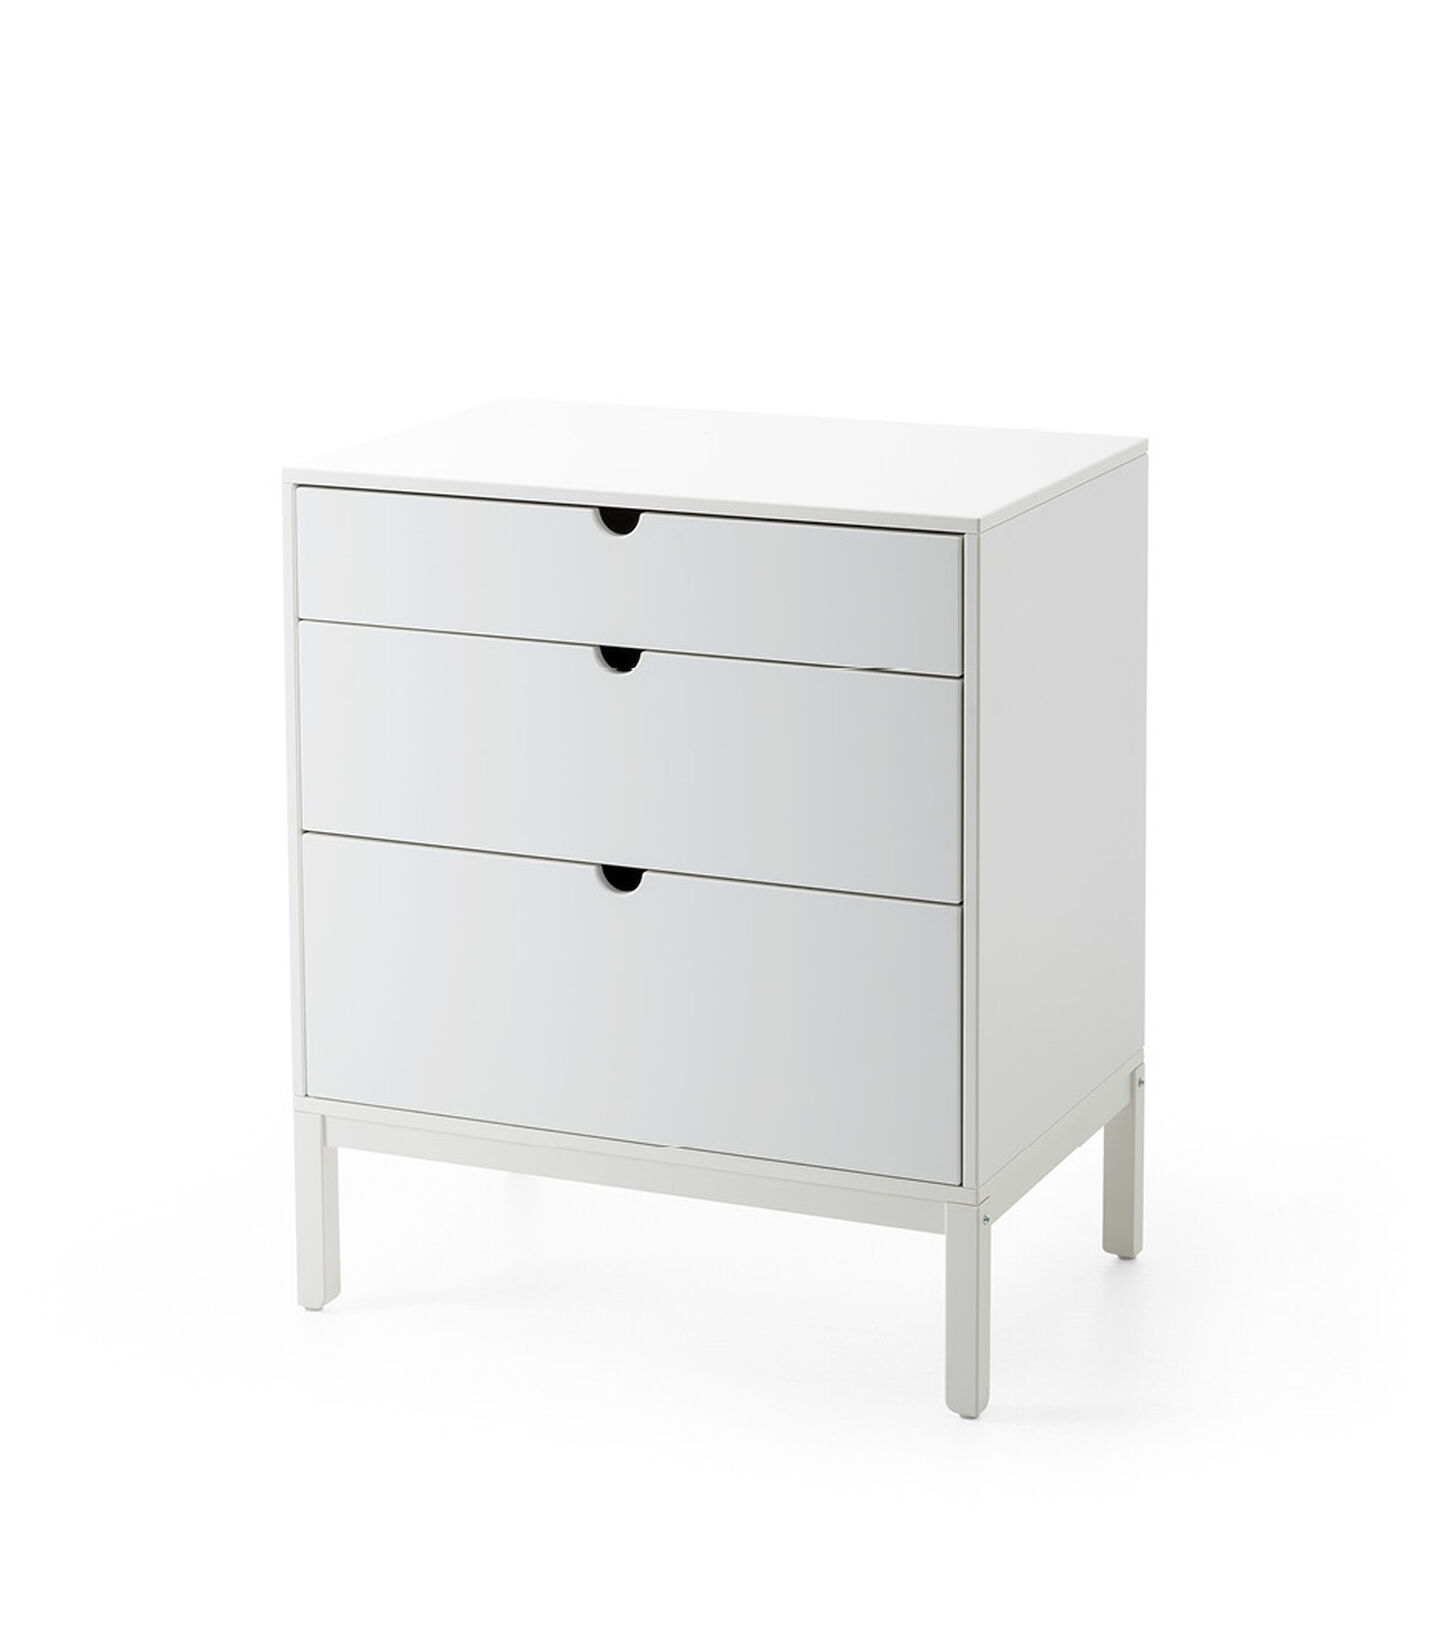 Stokke® Home™ Dresser White, White, mainview view 1